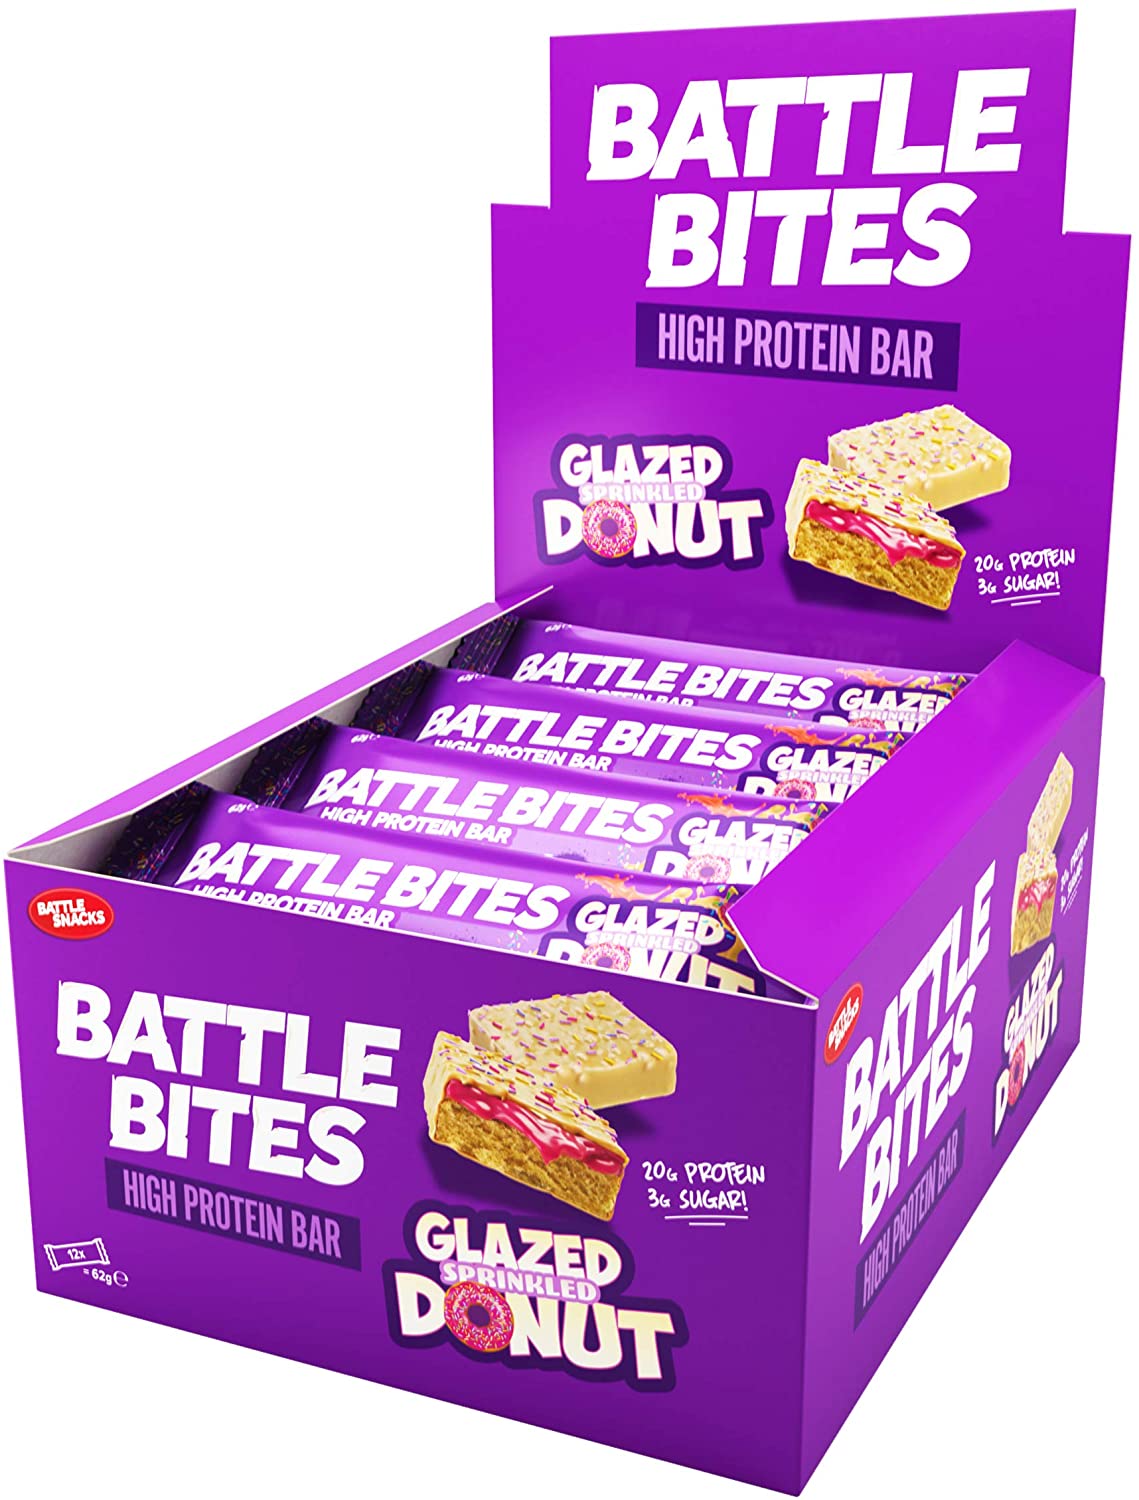 Battle Bites Protein Bar – Glazed Sprinkled Donut